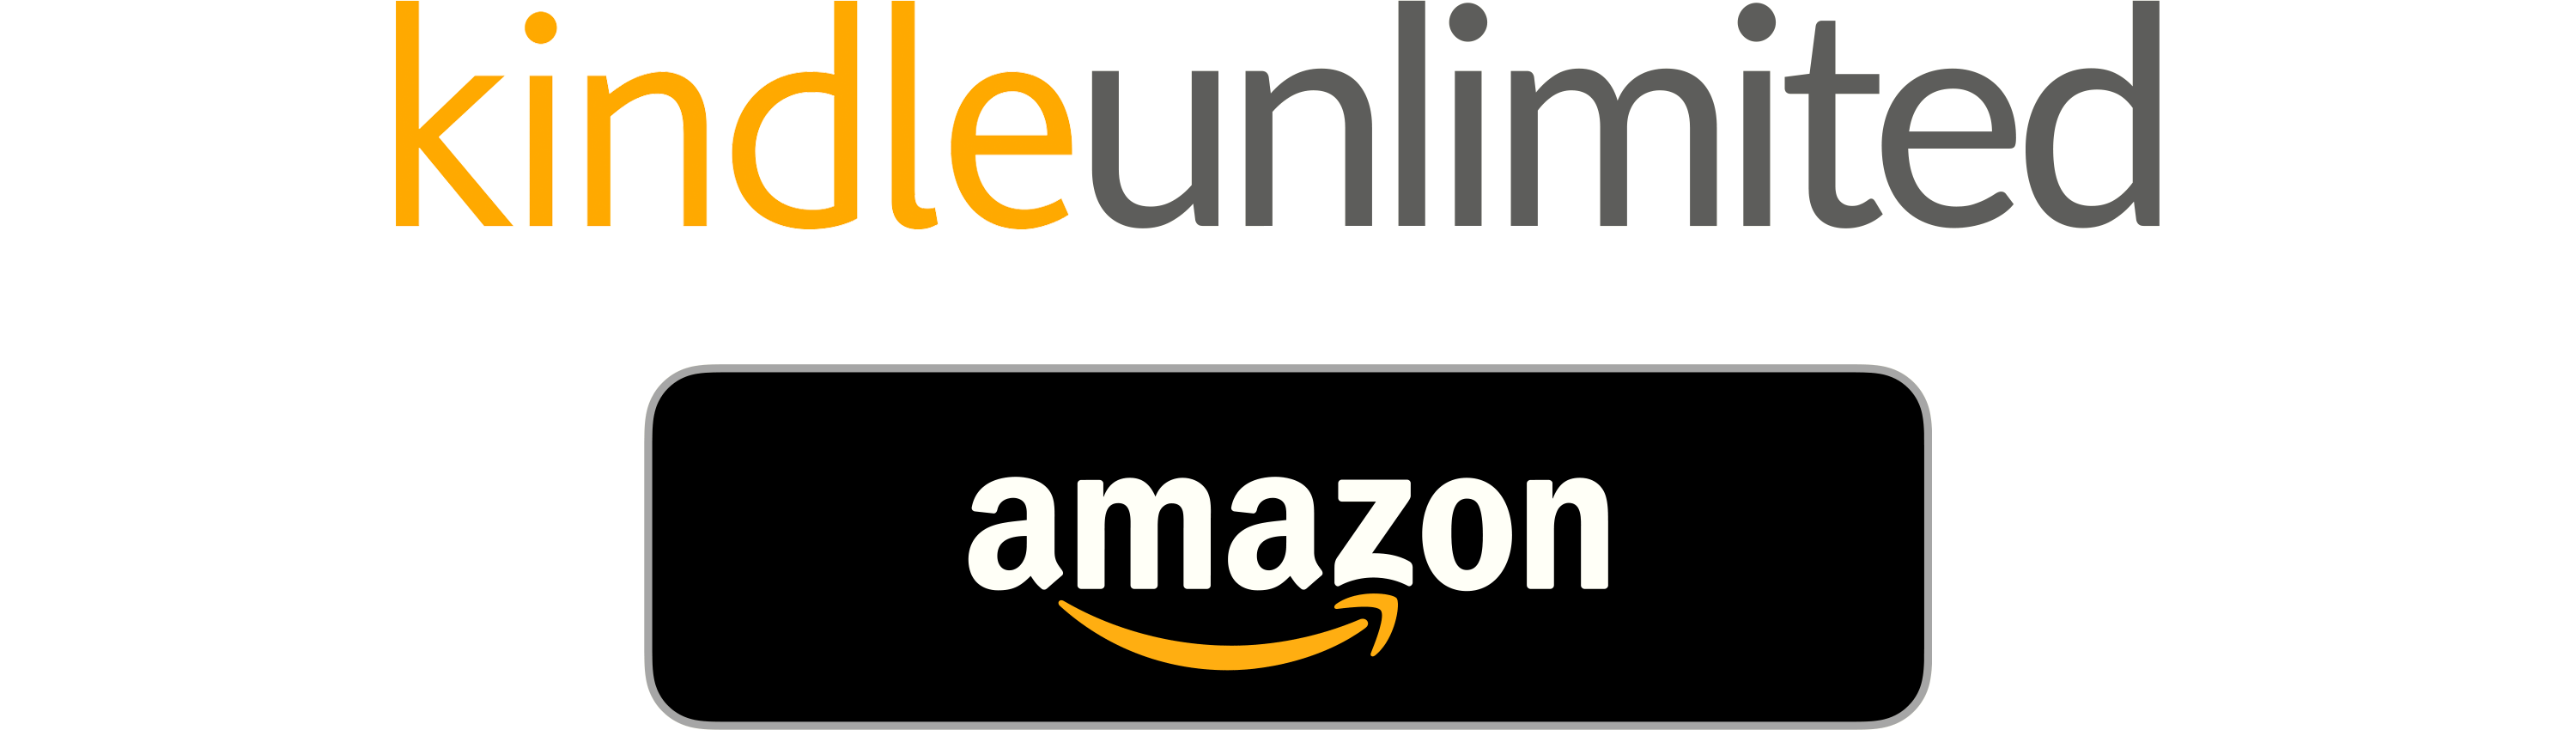 Amazon store button